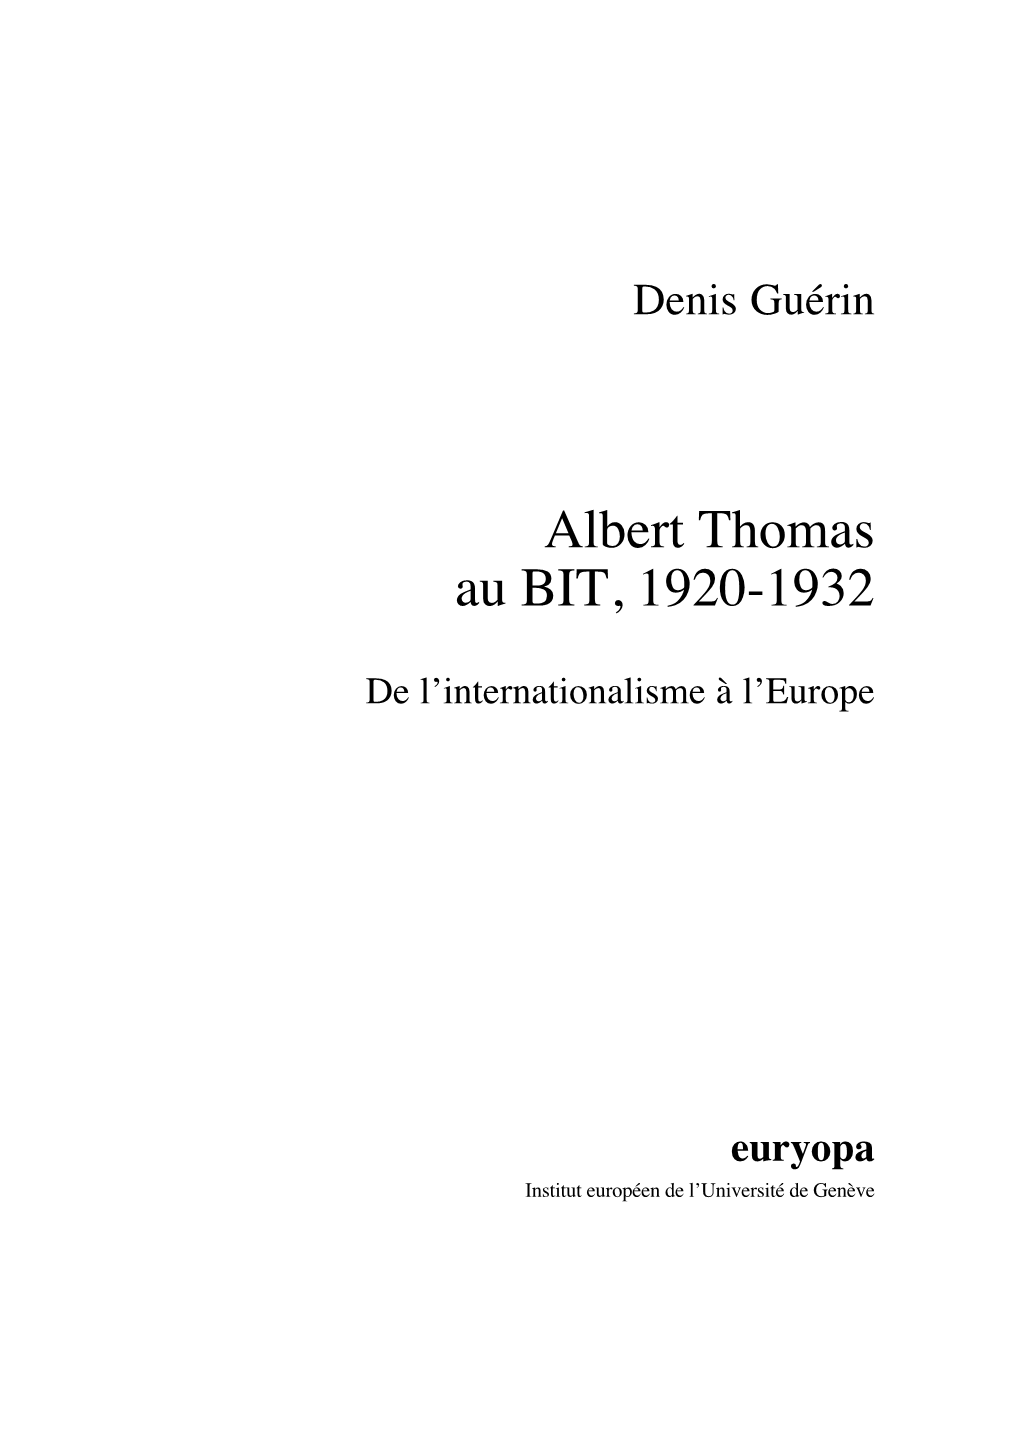 Albert Thomas Au BIT, 1920-1932